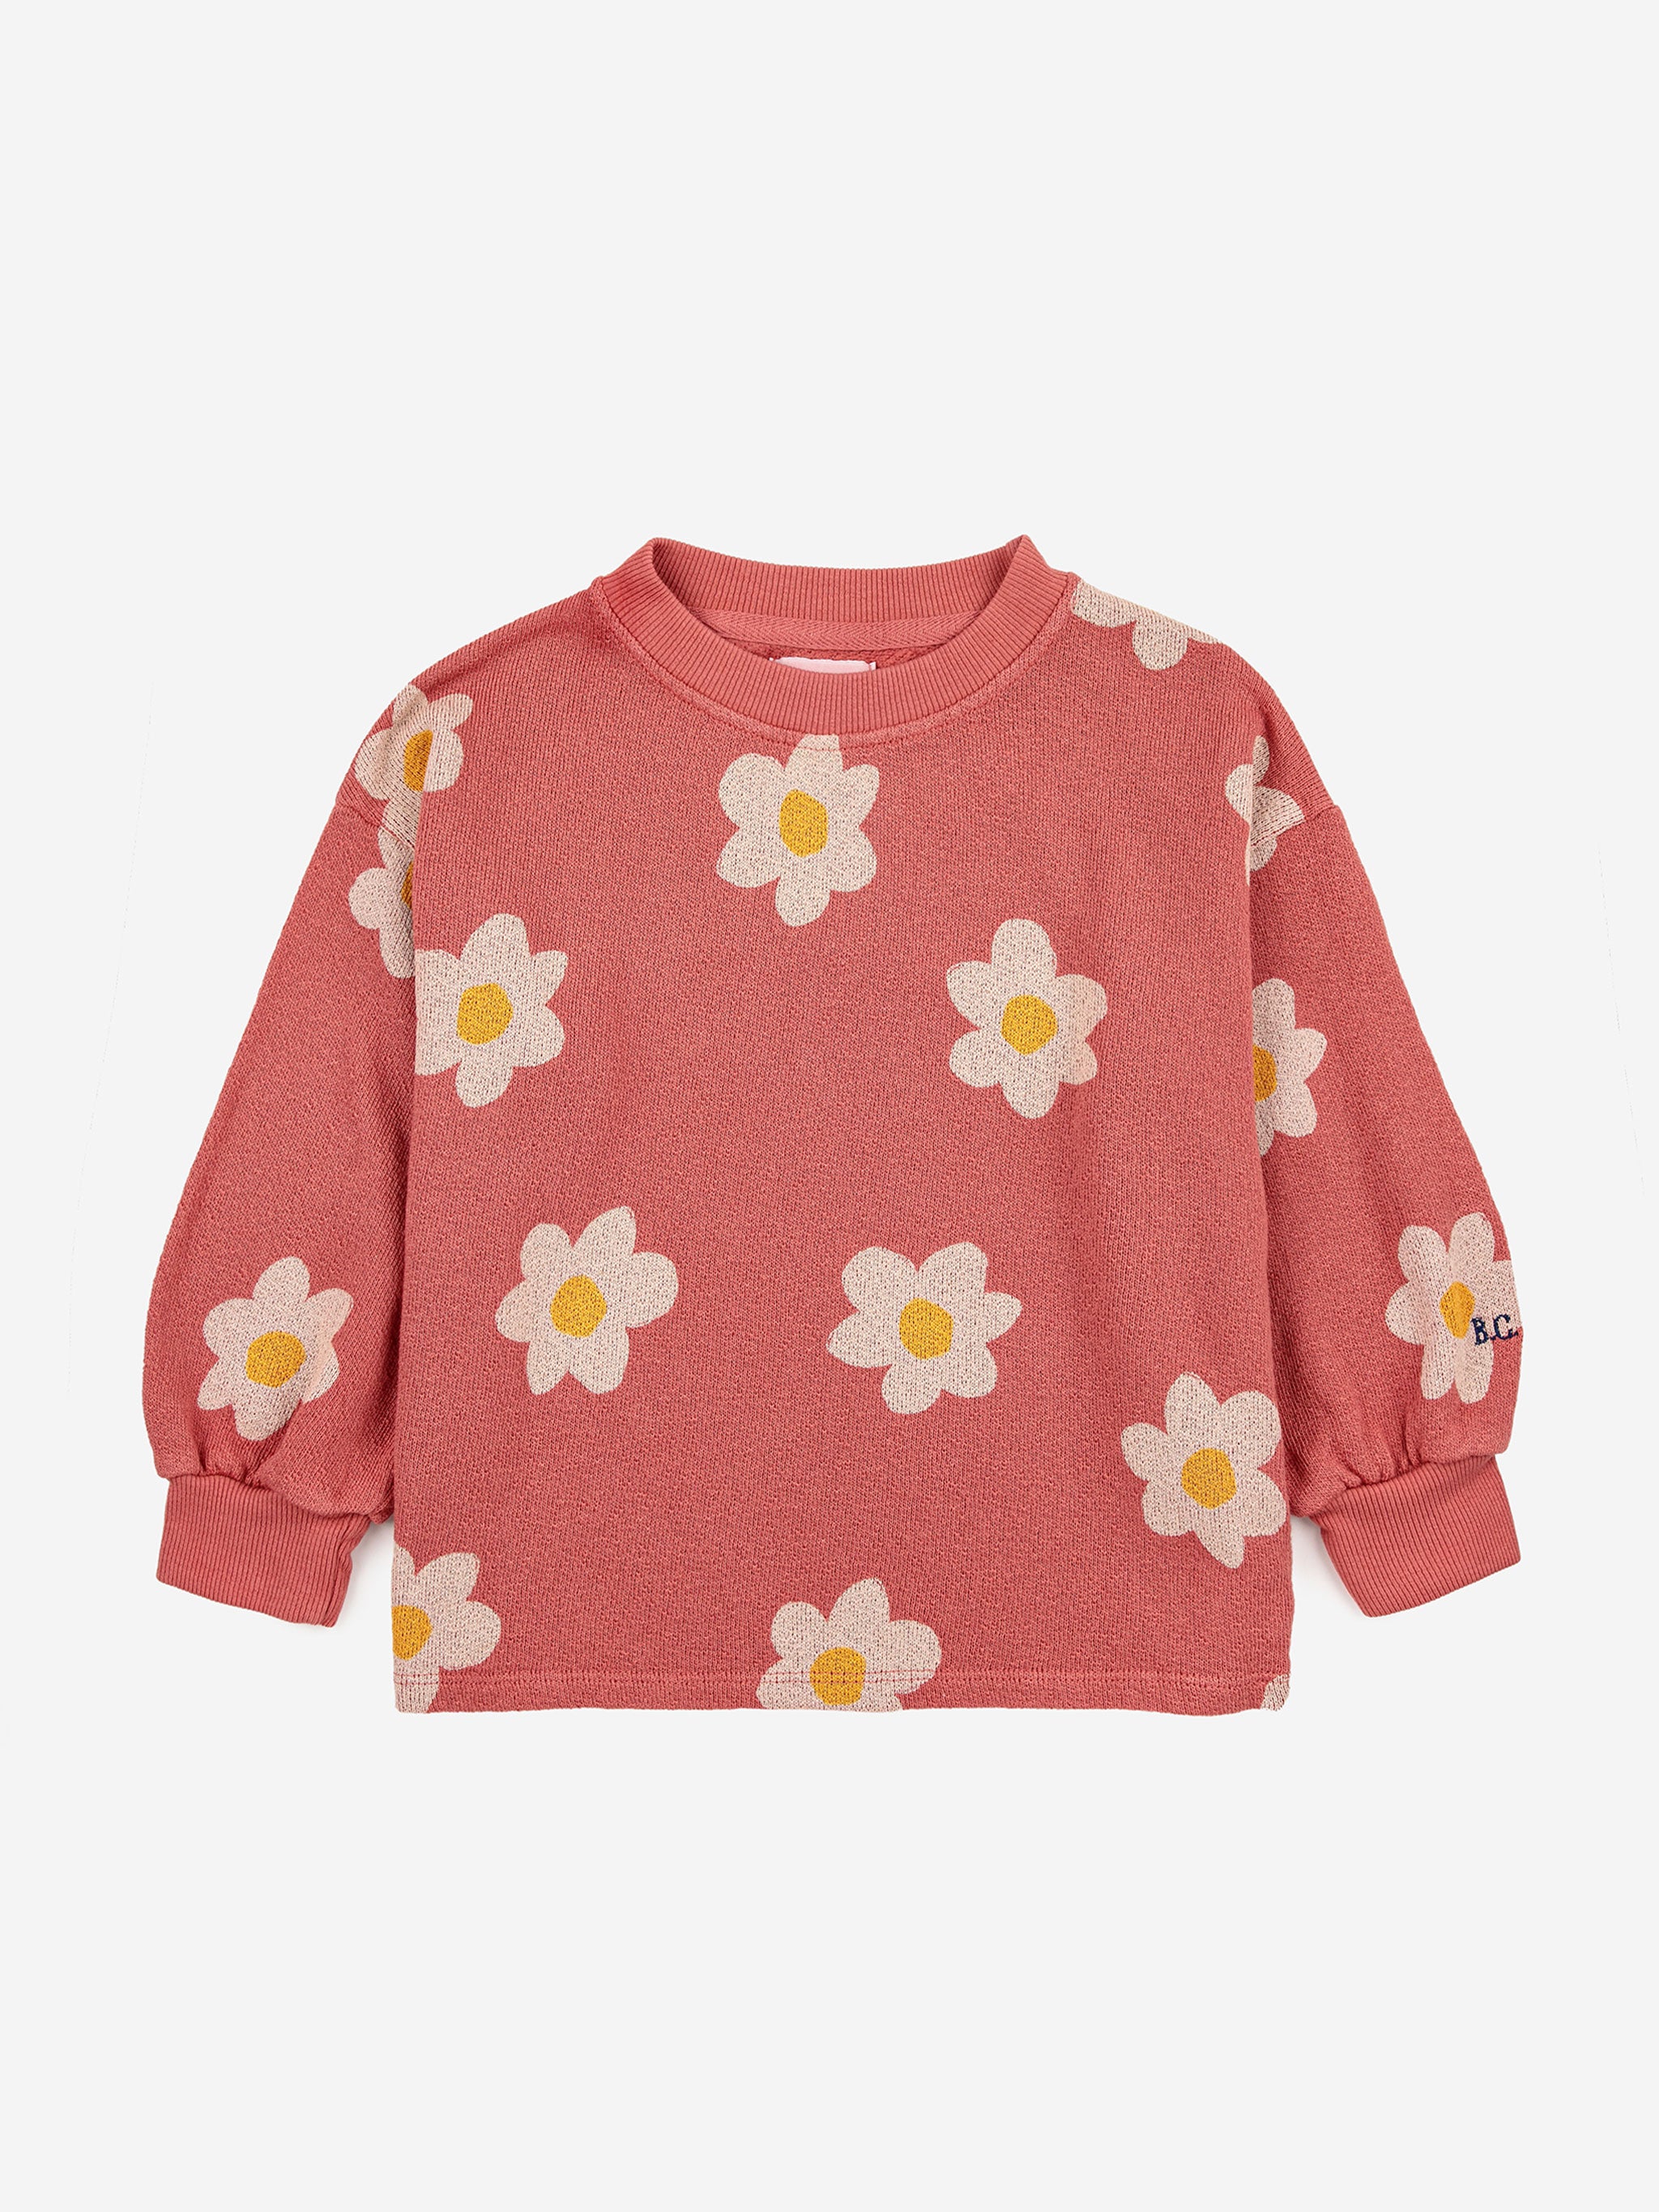 – sweatshirt Big Choses all Bobo Flower over